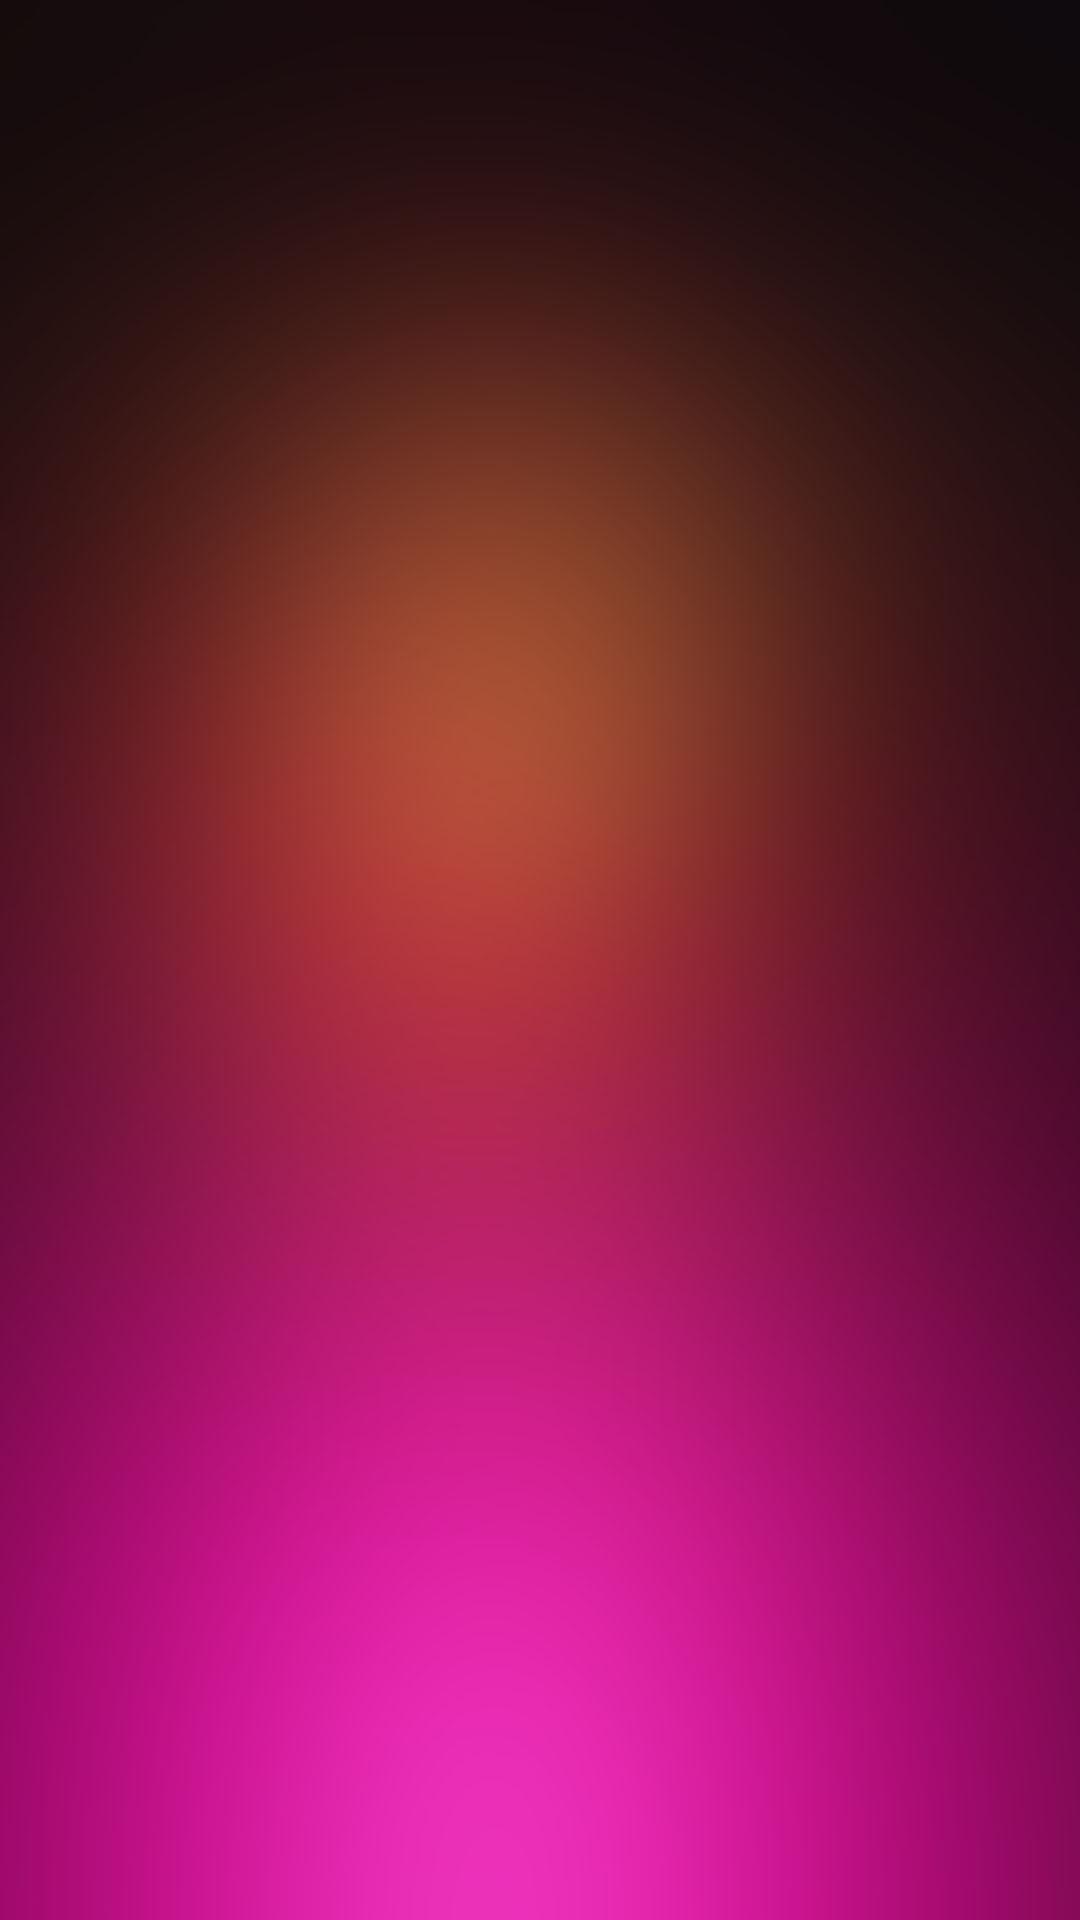 Intense Pink Orange Gradient android wallpaper